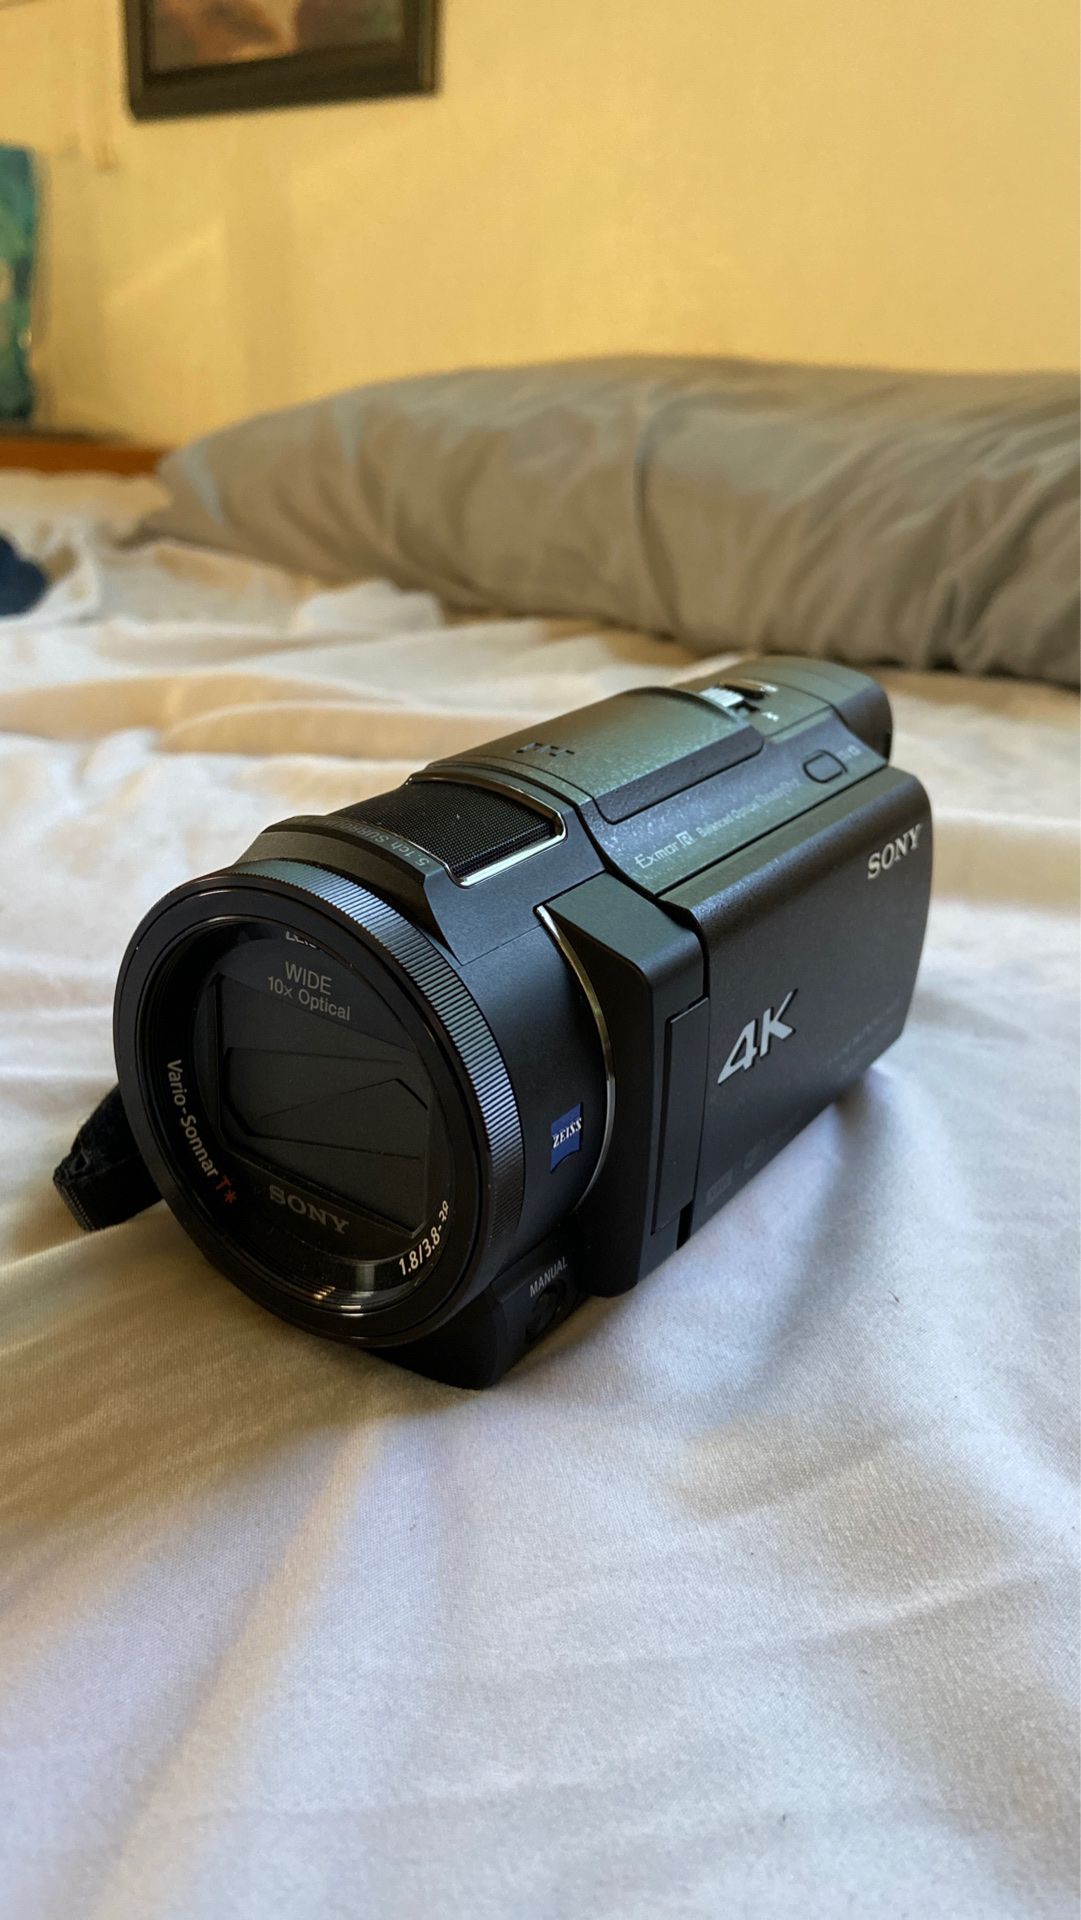 Sony FDR-AX33 4K handyman camcorder